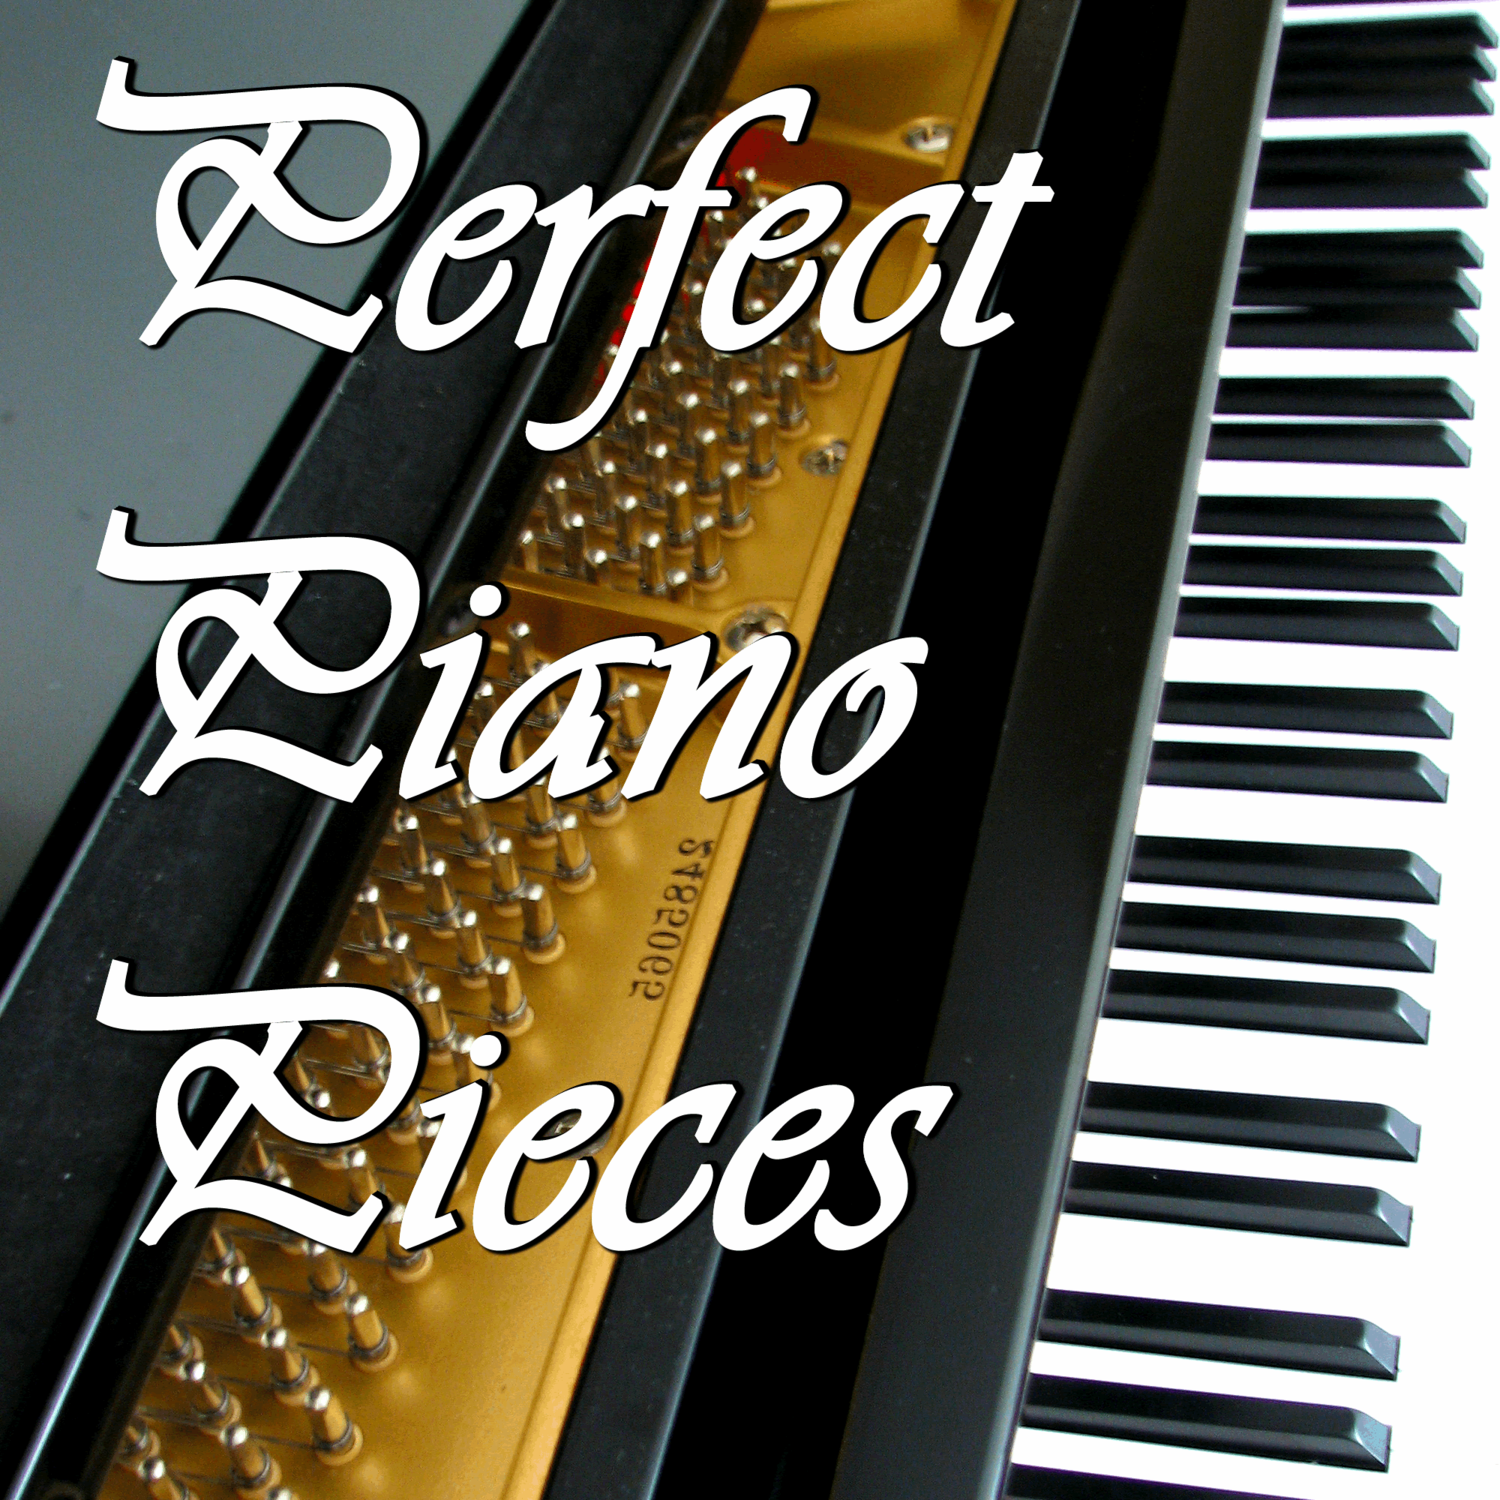 Perfect Piano Pieces